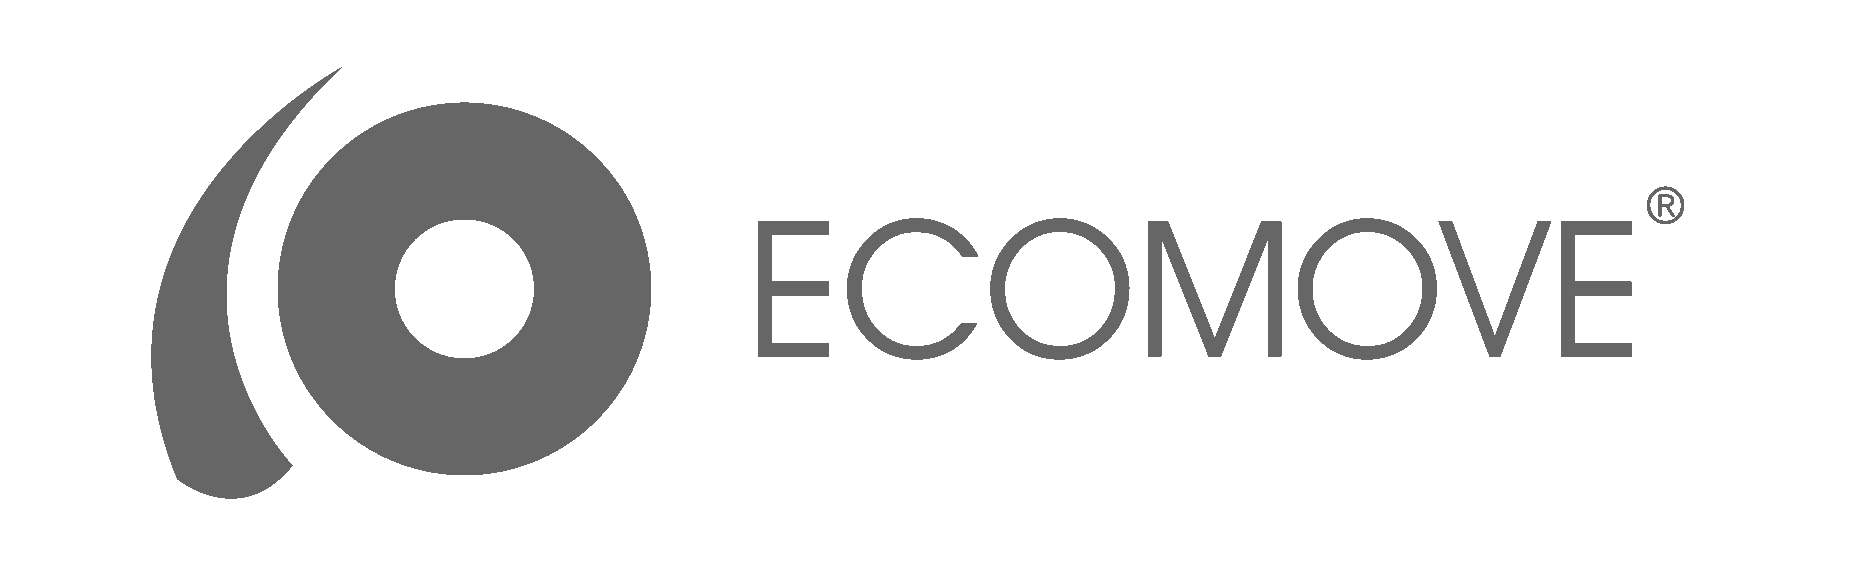 ECOmove-logo.png